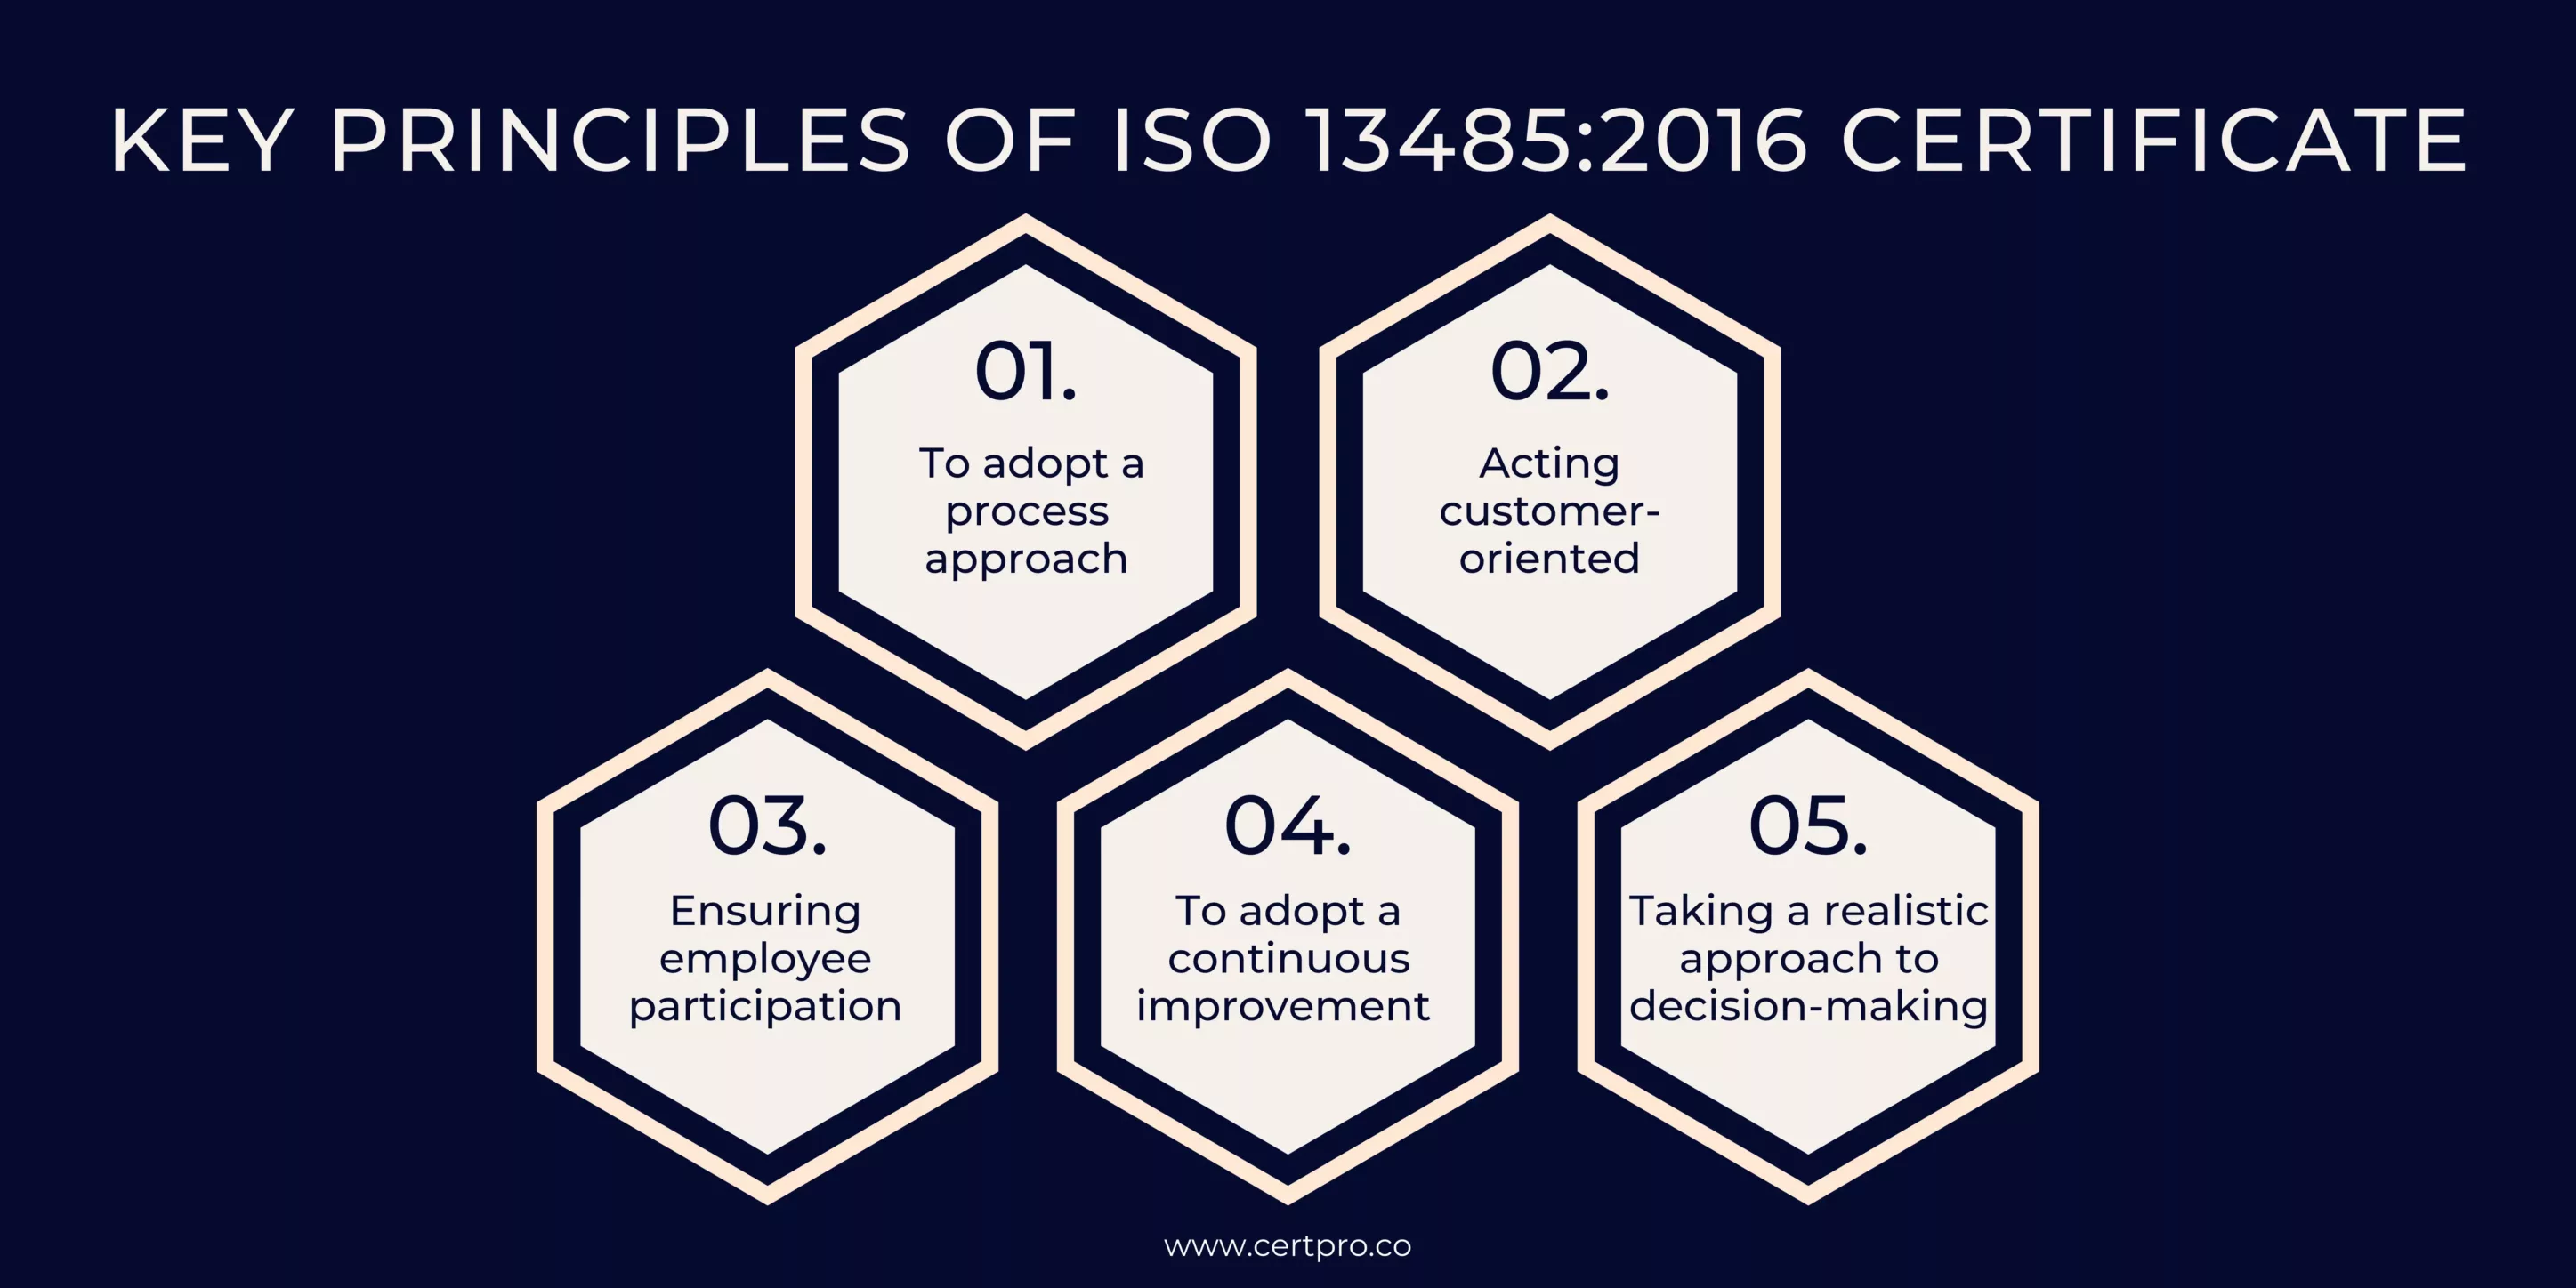 KEY PRINCIPLES OF ISO 13485-2016 CERTIFICATE